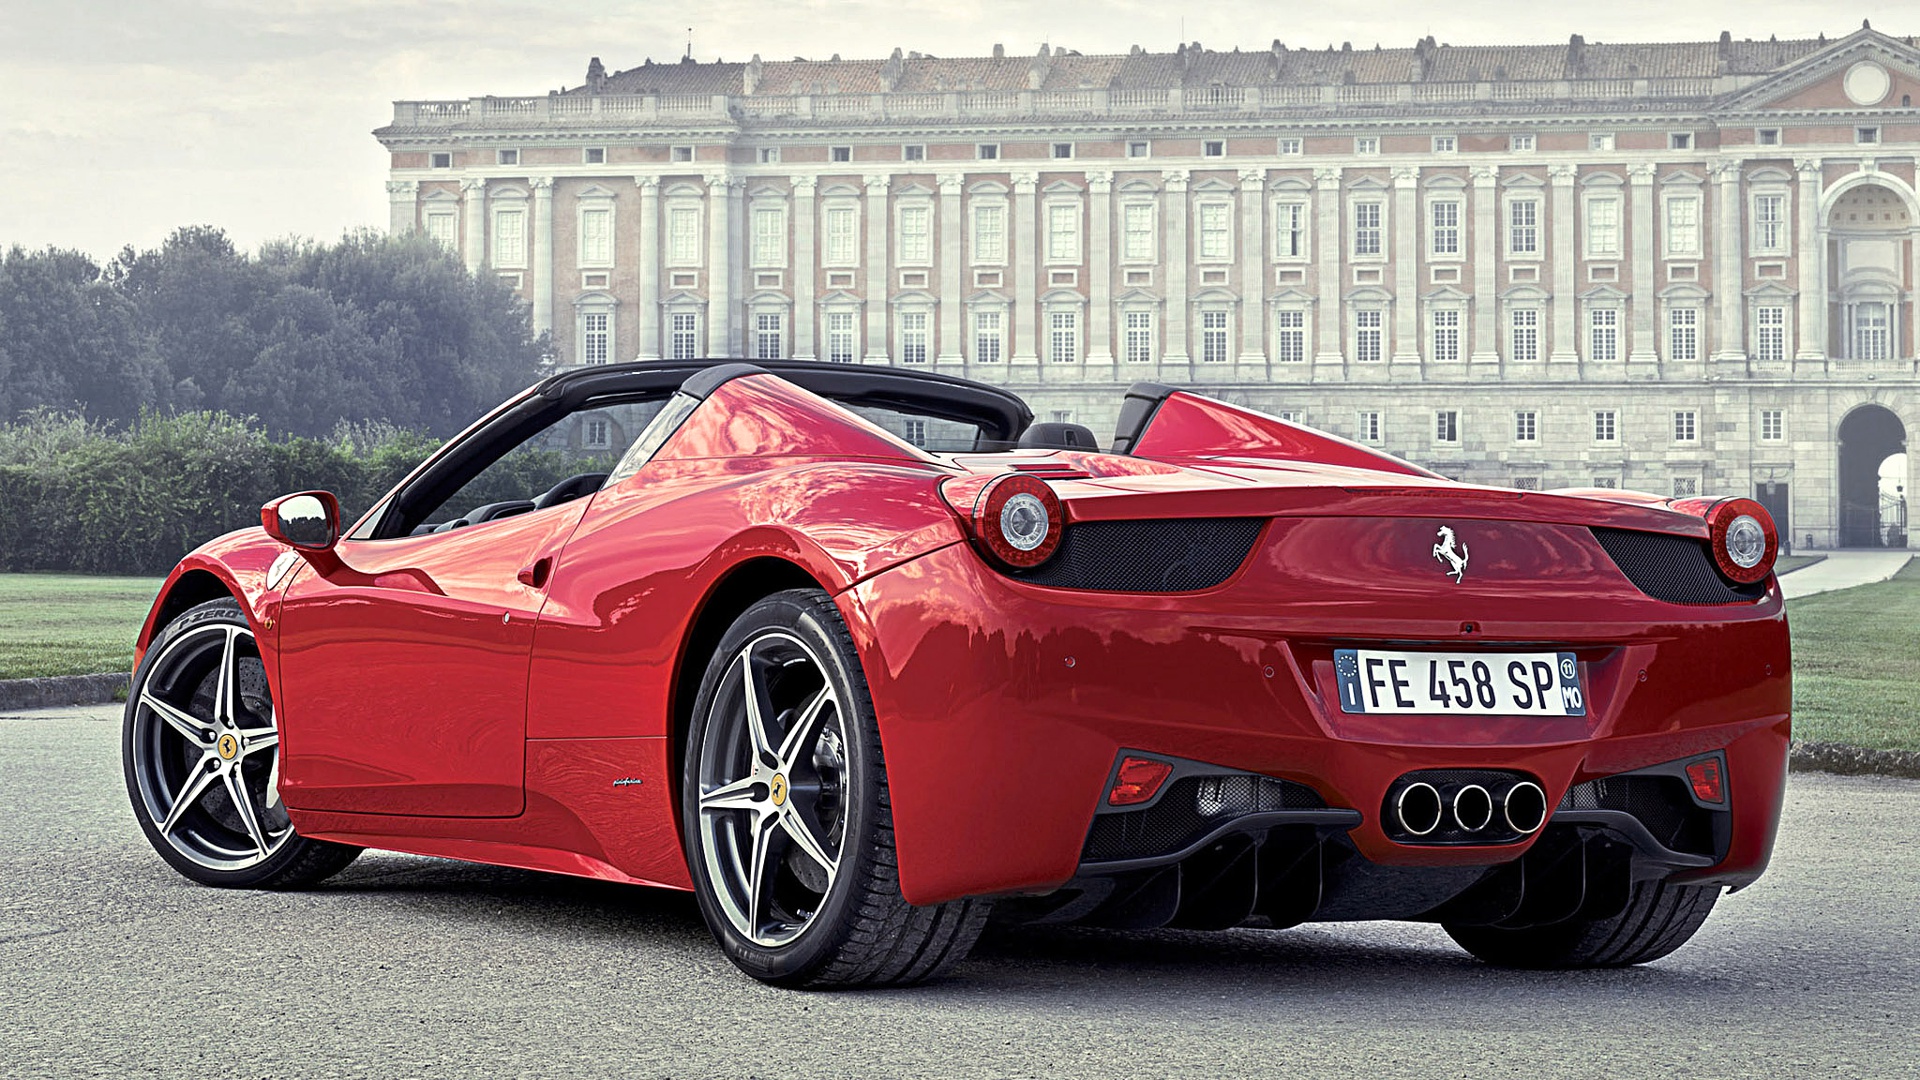 Ferrari HD Wallpaper Background For Your Desktop All Cars